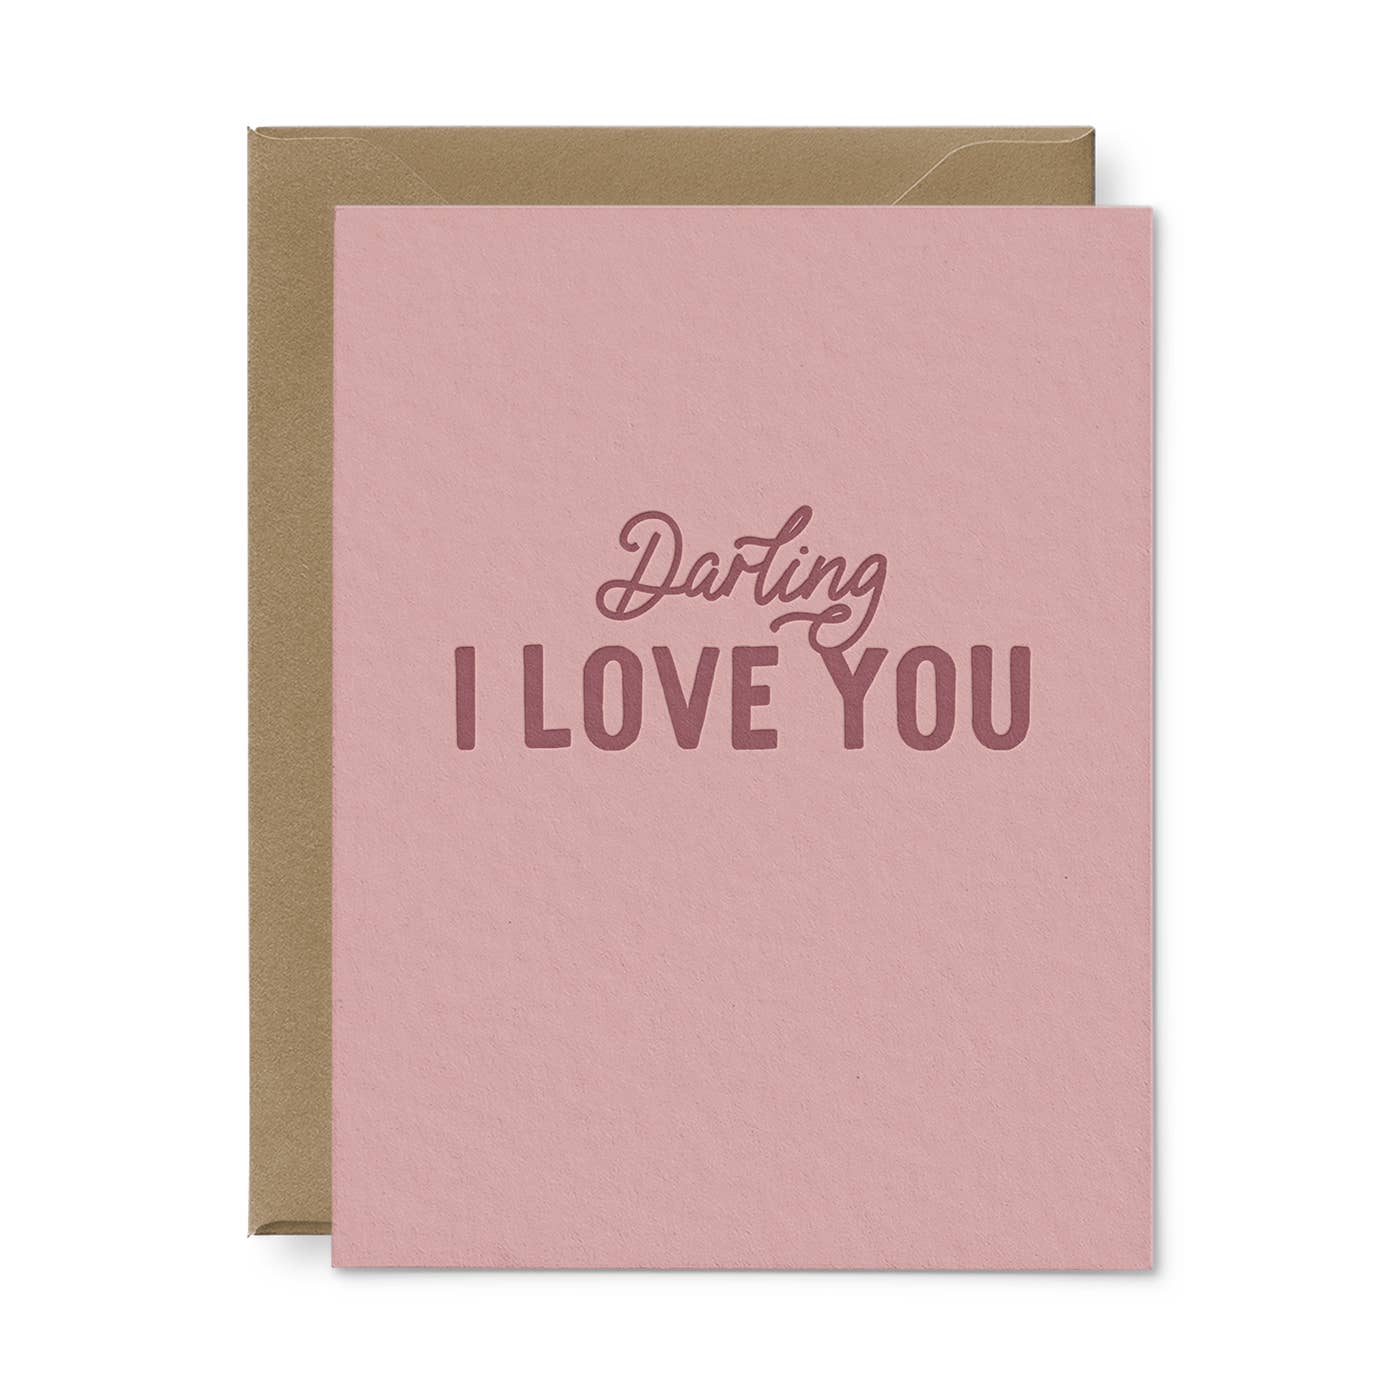 Darling I Love You Card